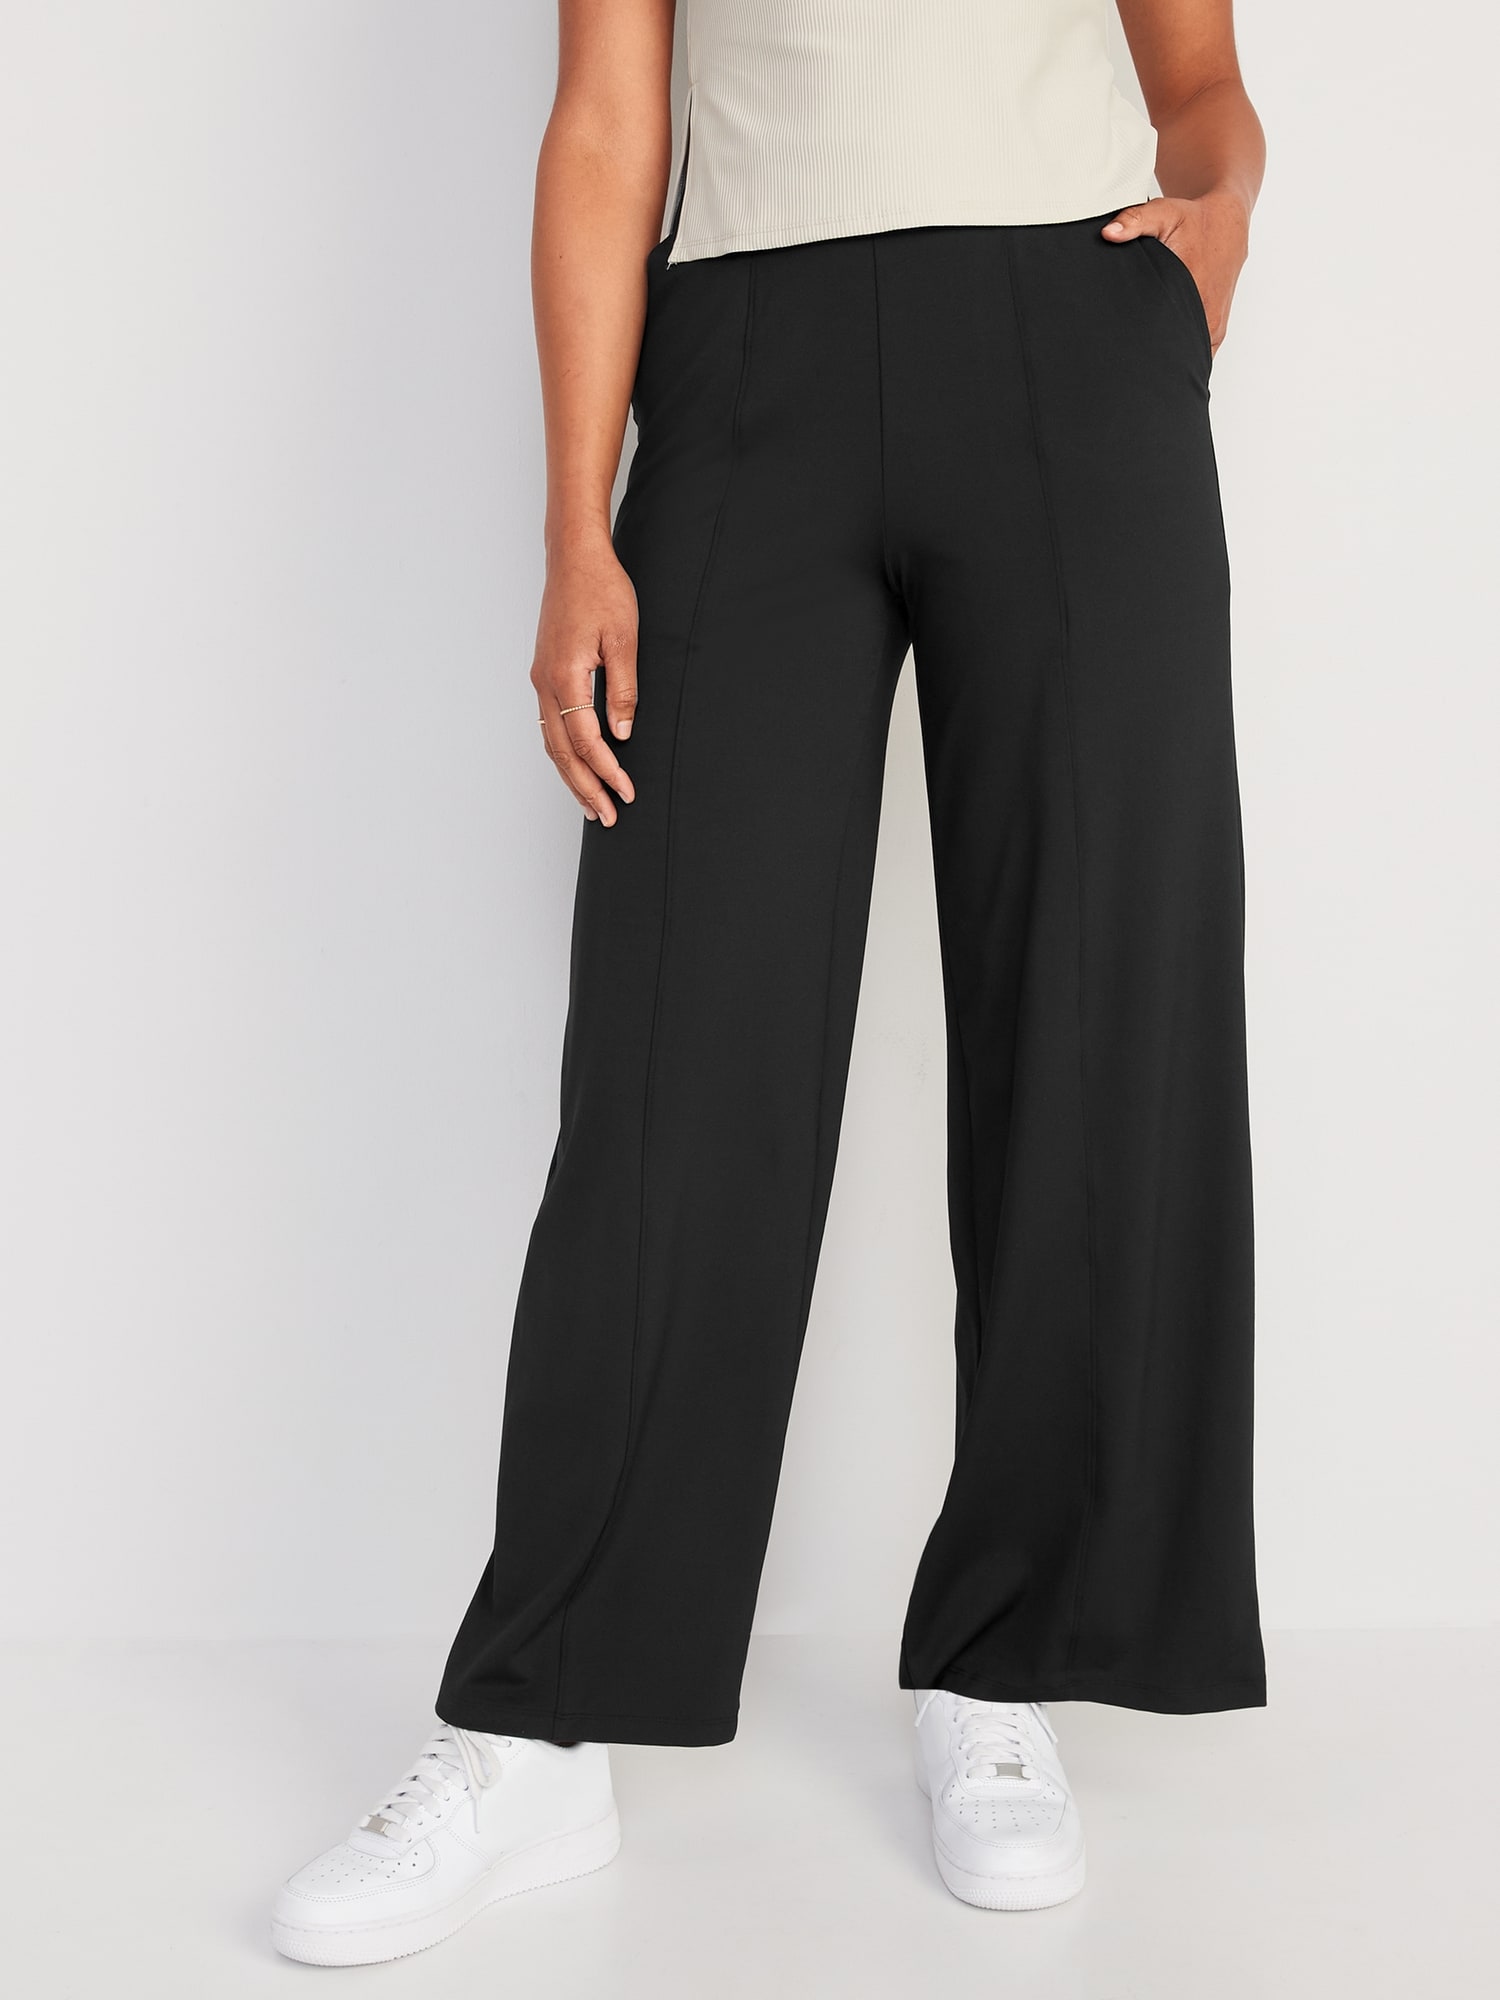 Mayfair Lounge Pants Womens Large Black Wide Leg Floral Polyester Spandex  Soft